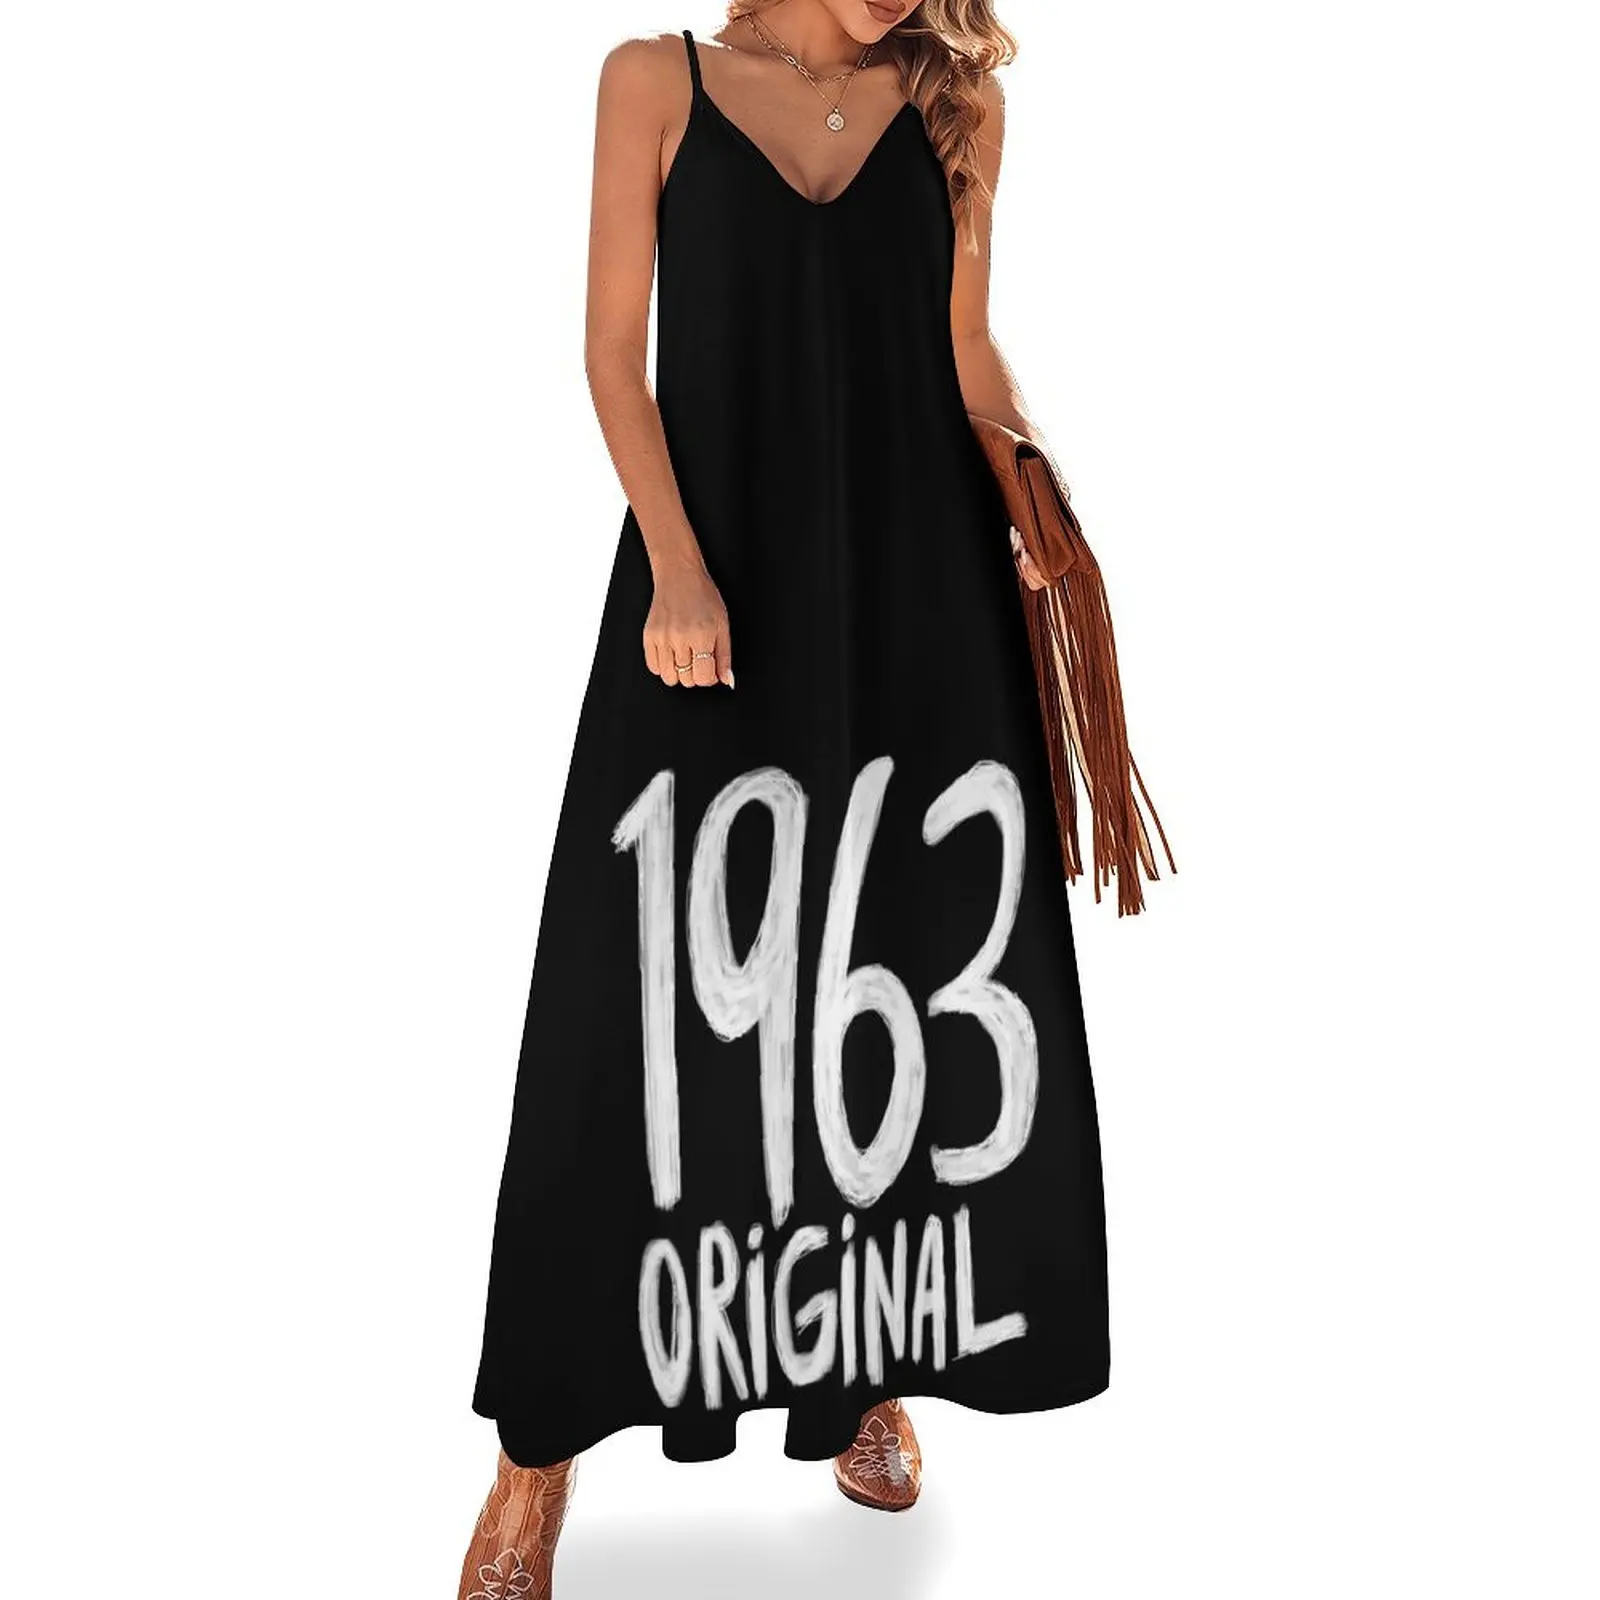 

1963 Original, born in 1963, Birth Year 1963 Sleeveless Dress Women's dresses women's elegant loose dresses